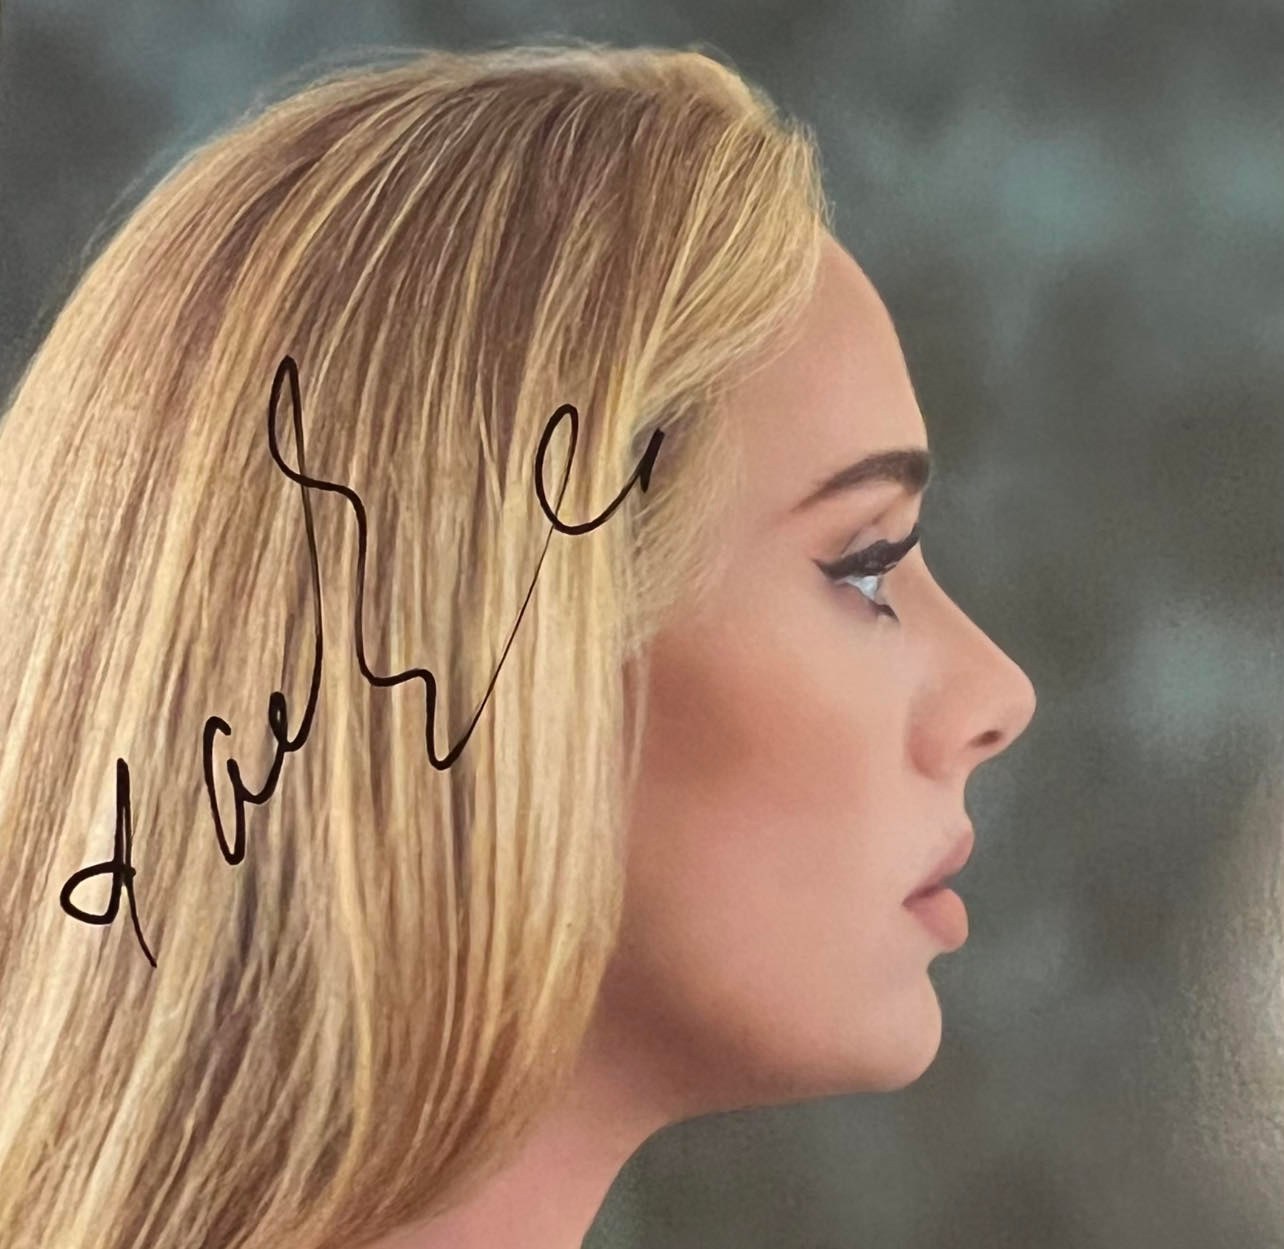 Adele Signed Vinyl LP- Beautiful signed vinyl.